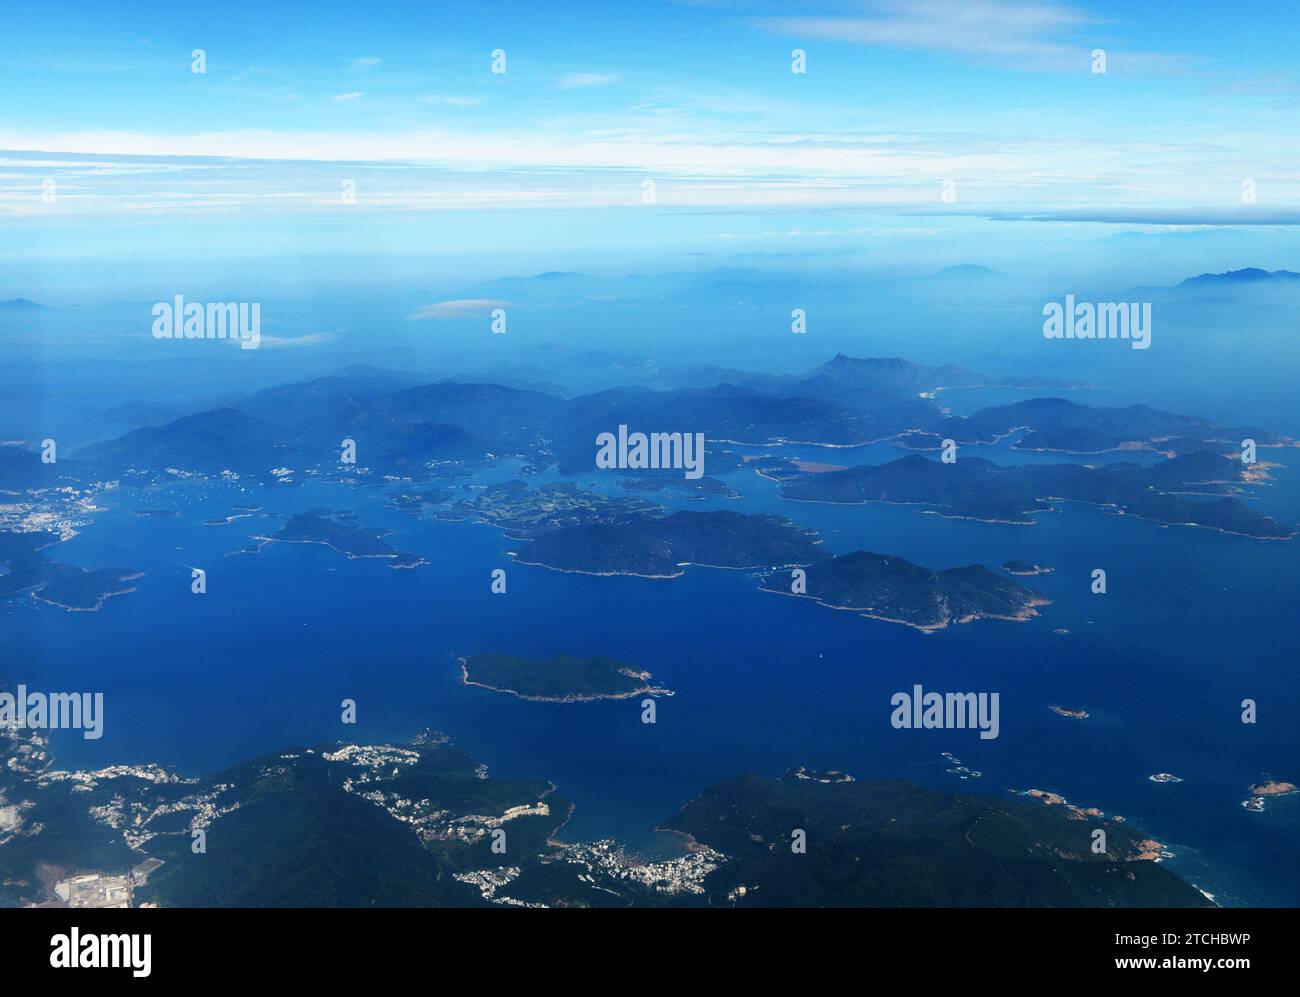 Aerial view of the Islands in Sai Kung, Hong Kong. Stock Photo